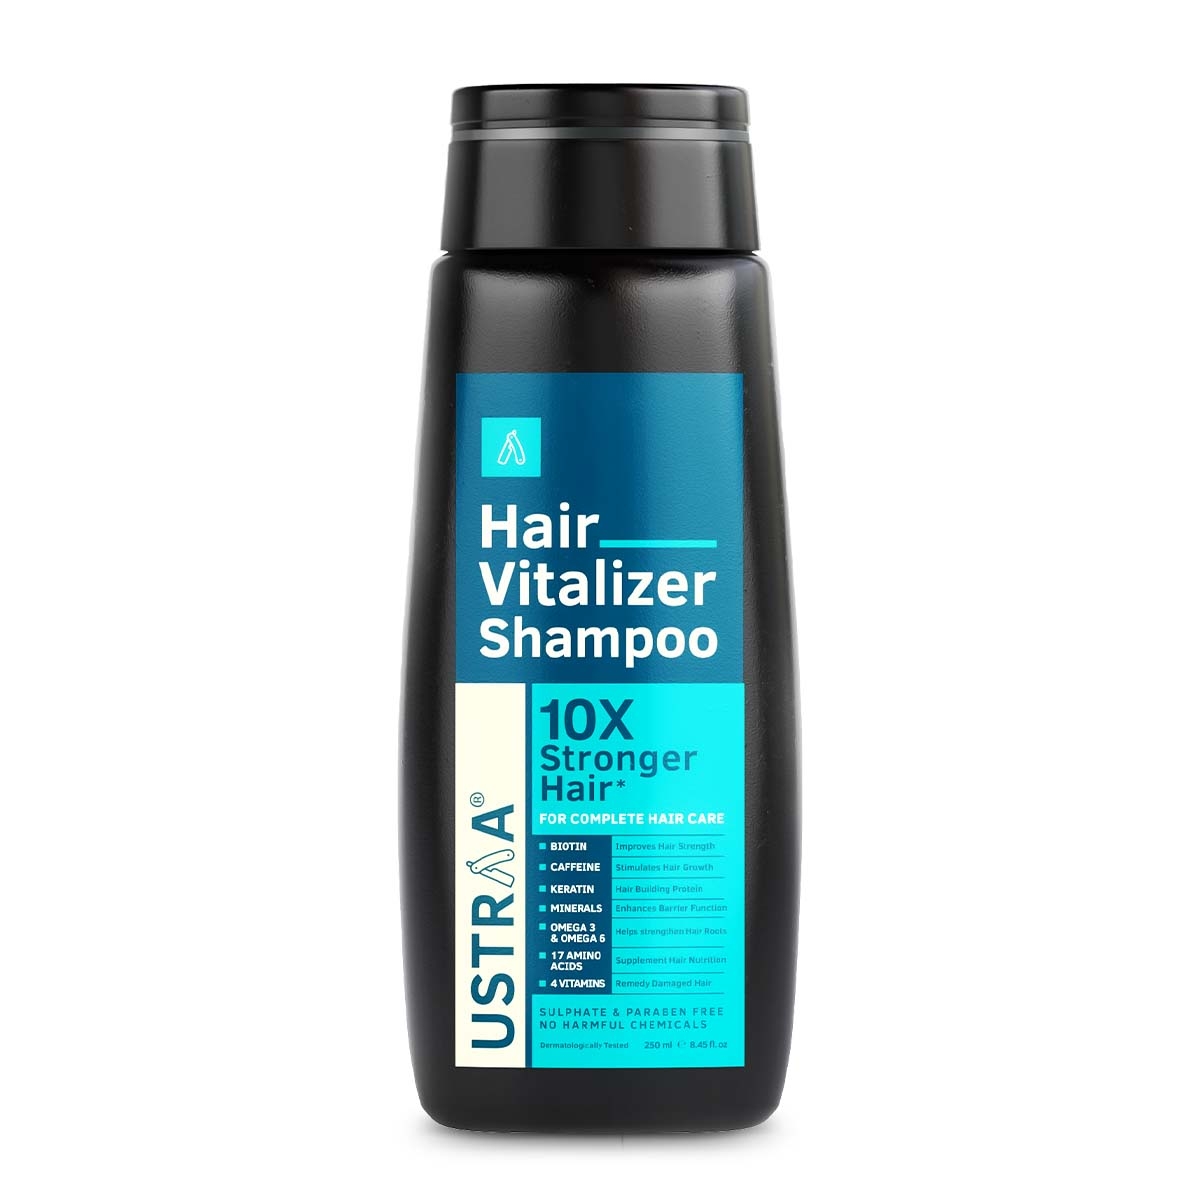 Ustraa | Ustraa Hair Vitalizer Shampoo - 250ml & Daily-Use Hair Cream - 100g 1